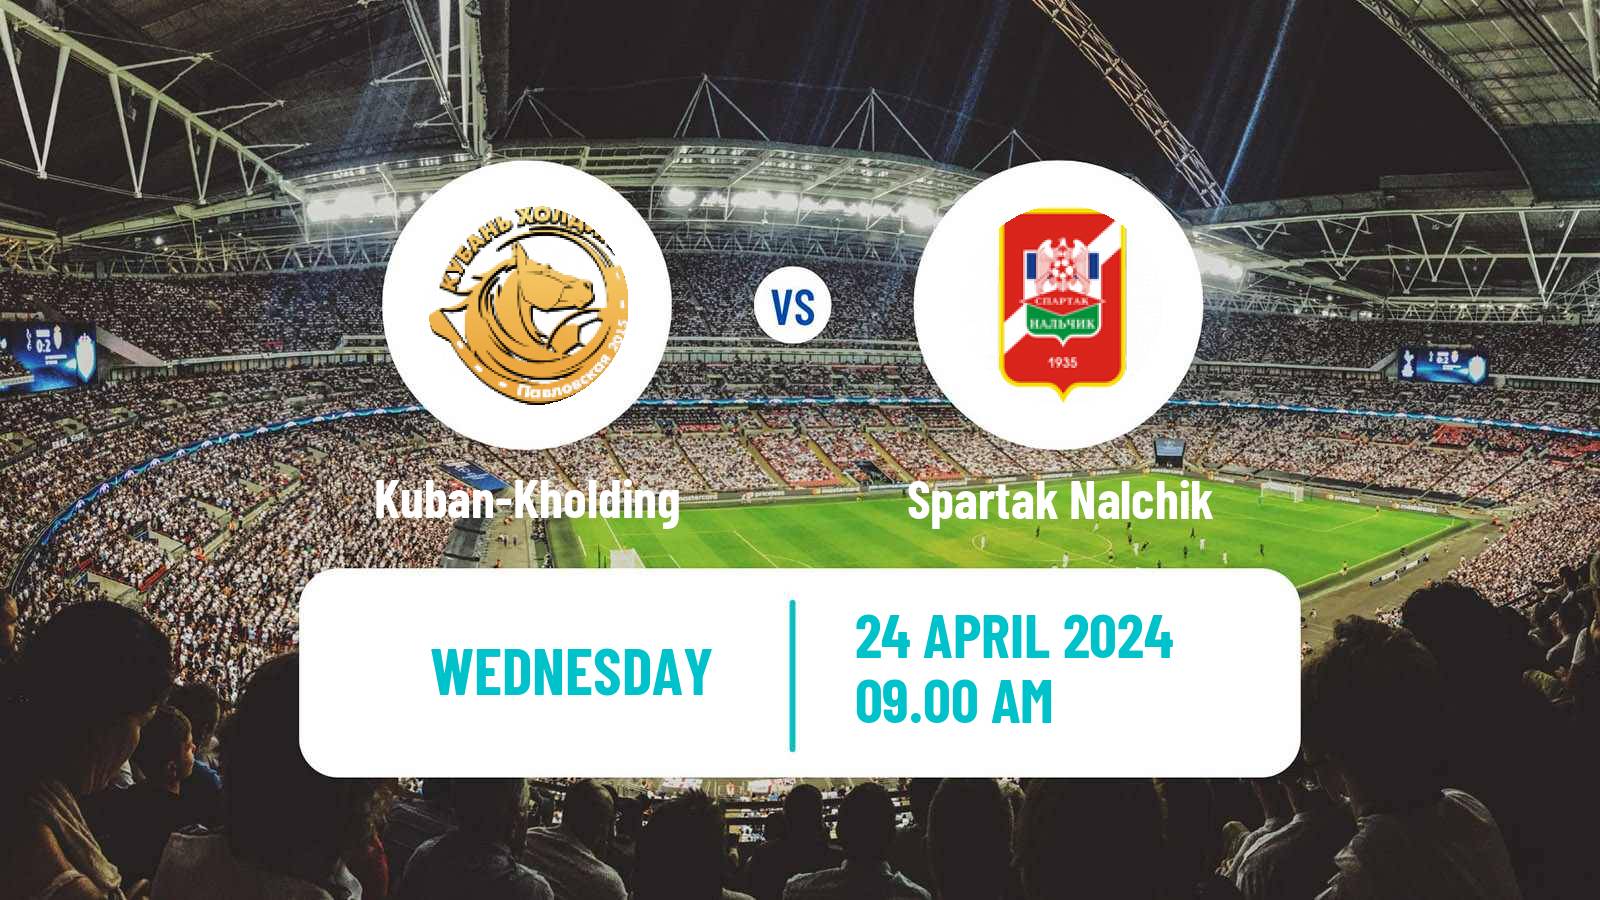 Soccer FNL 2 Division B Group 1 Kuban-Kholding - Spartak Nalchik